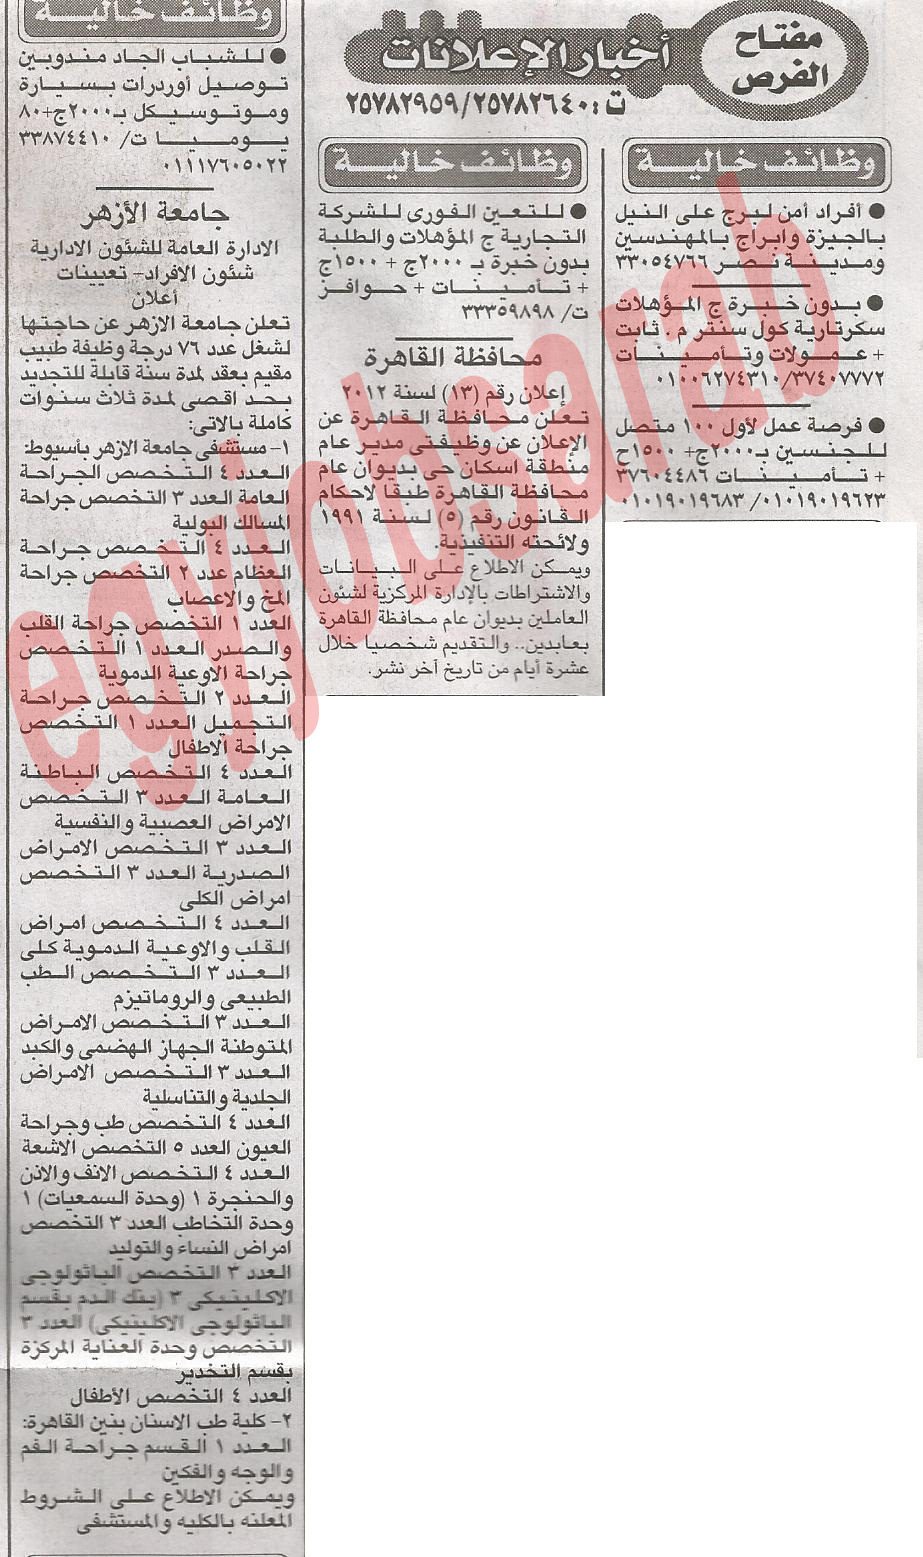 وظائف وفرص عمل جريدة الاخبار الاربعاء 5/12/2012 - اعلانات مصر %D8%A7%D9%84%D8%A7%D8%AE%D8%A8%D8%A7%D8%B1+1